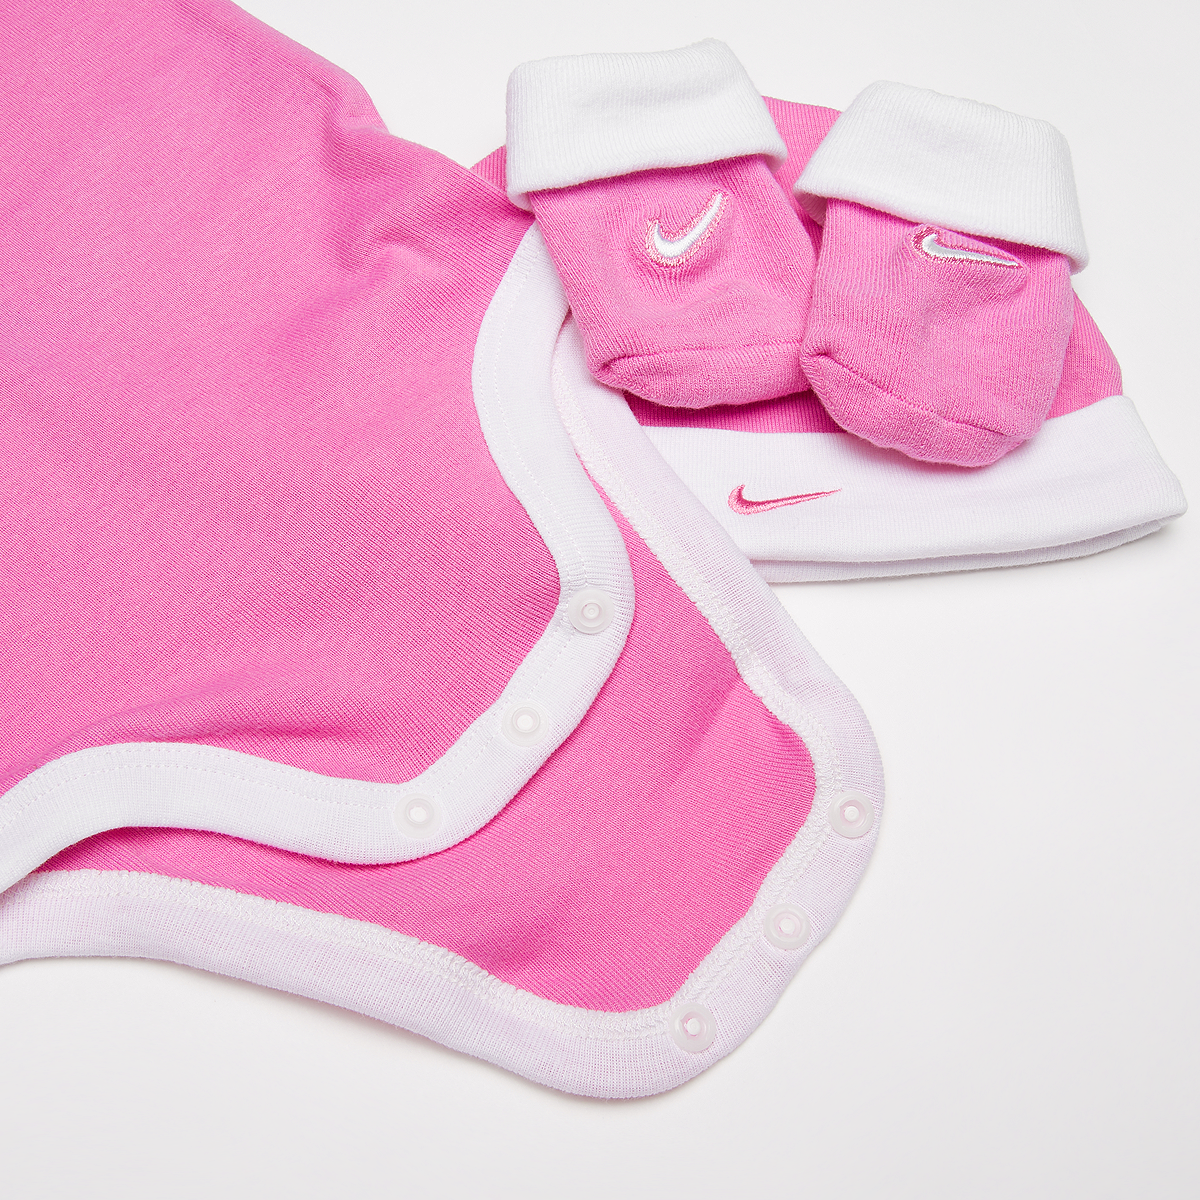 Nike Junios Swoosh Set (3 Piece) Baby sets Kids playful pink maat: 6m-12m beschikbare maaten:6m-12m